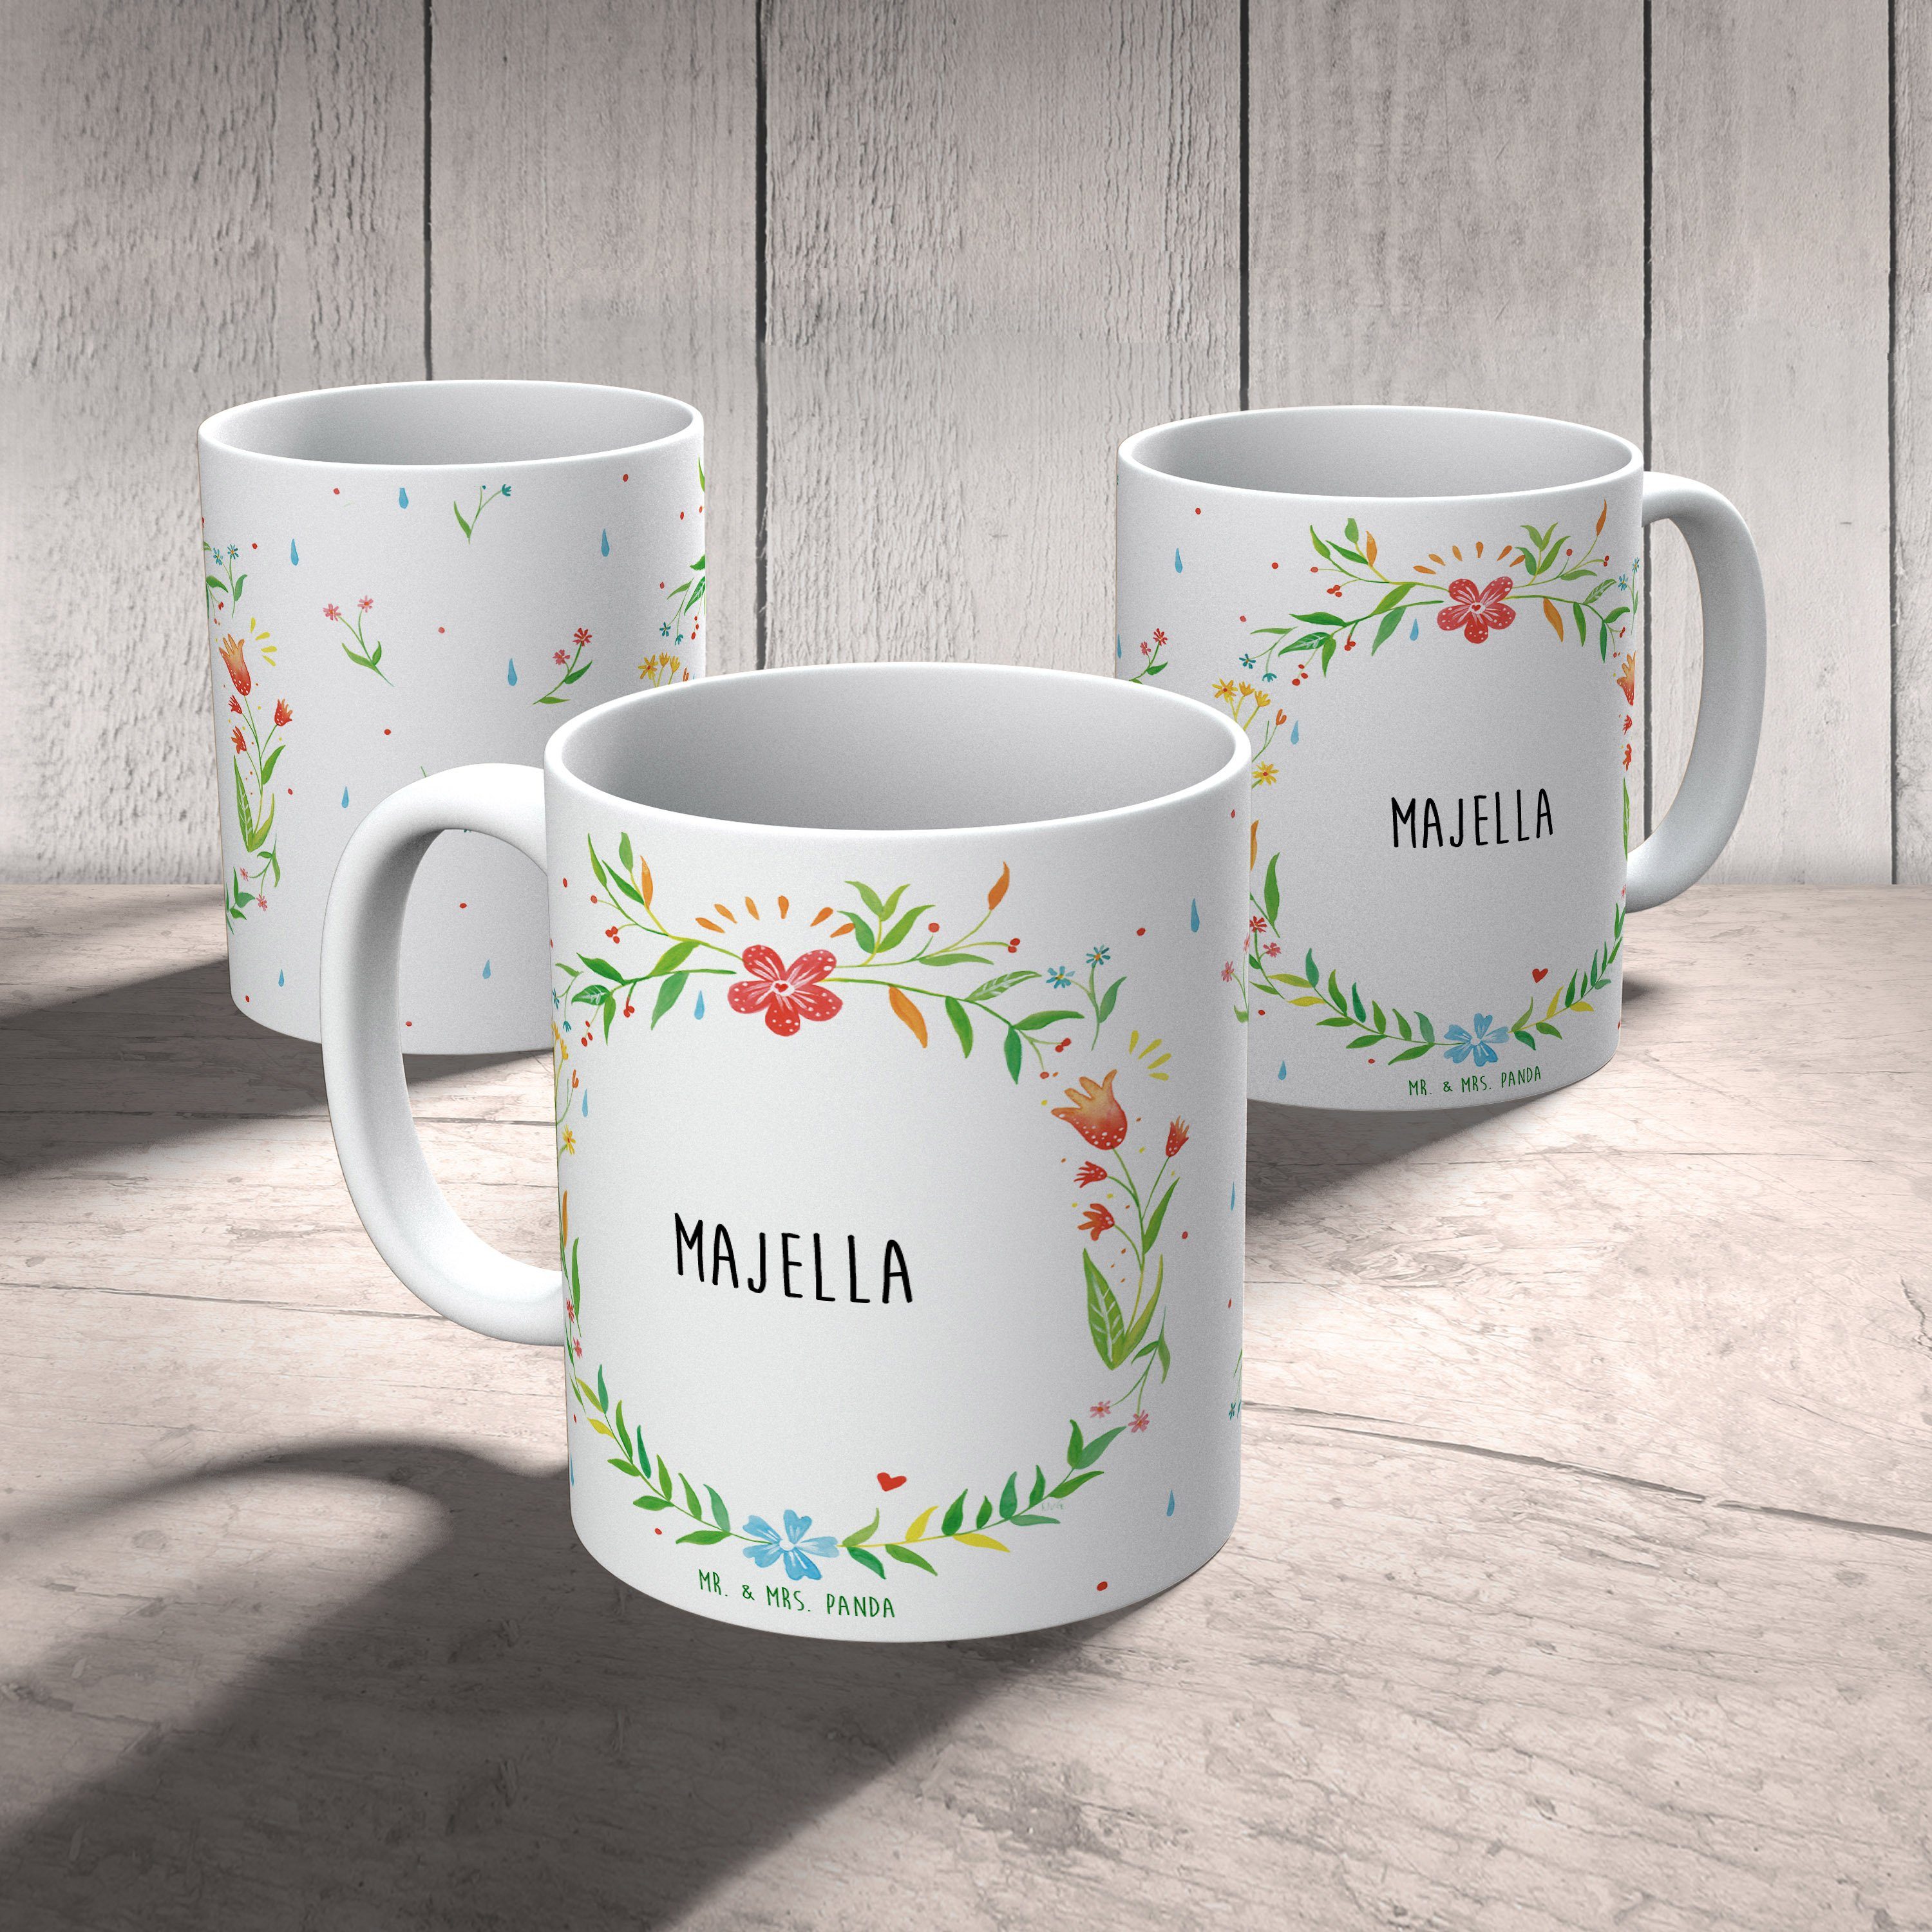 & Tasse Tasse, - Keramik S, Tasse, Geschenk Panda Kaffeebecher, Mrs. Geschenk, Majella Büro Tasse Mr.